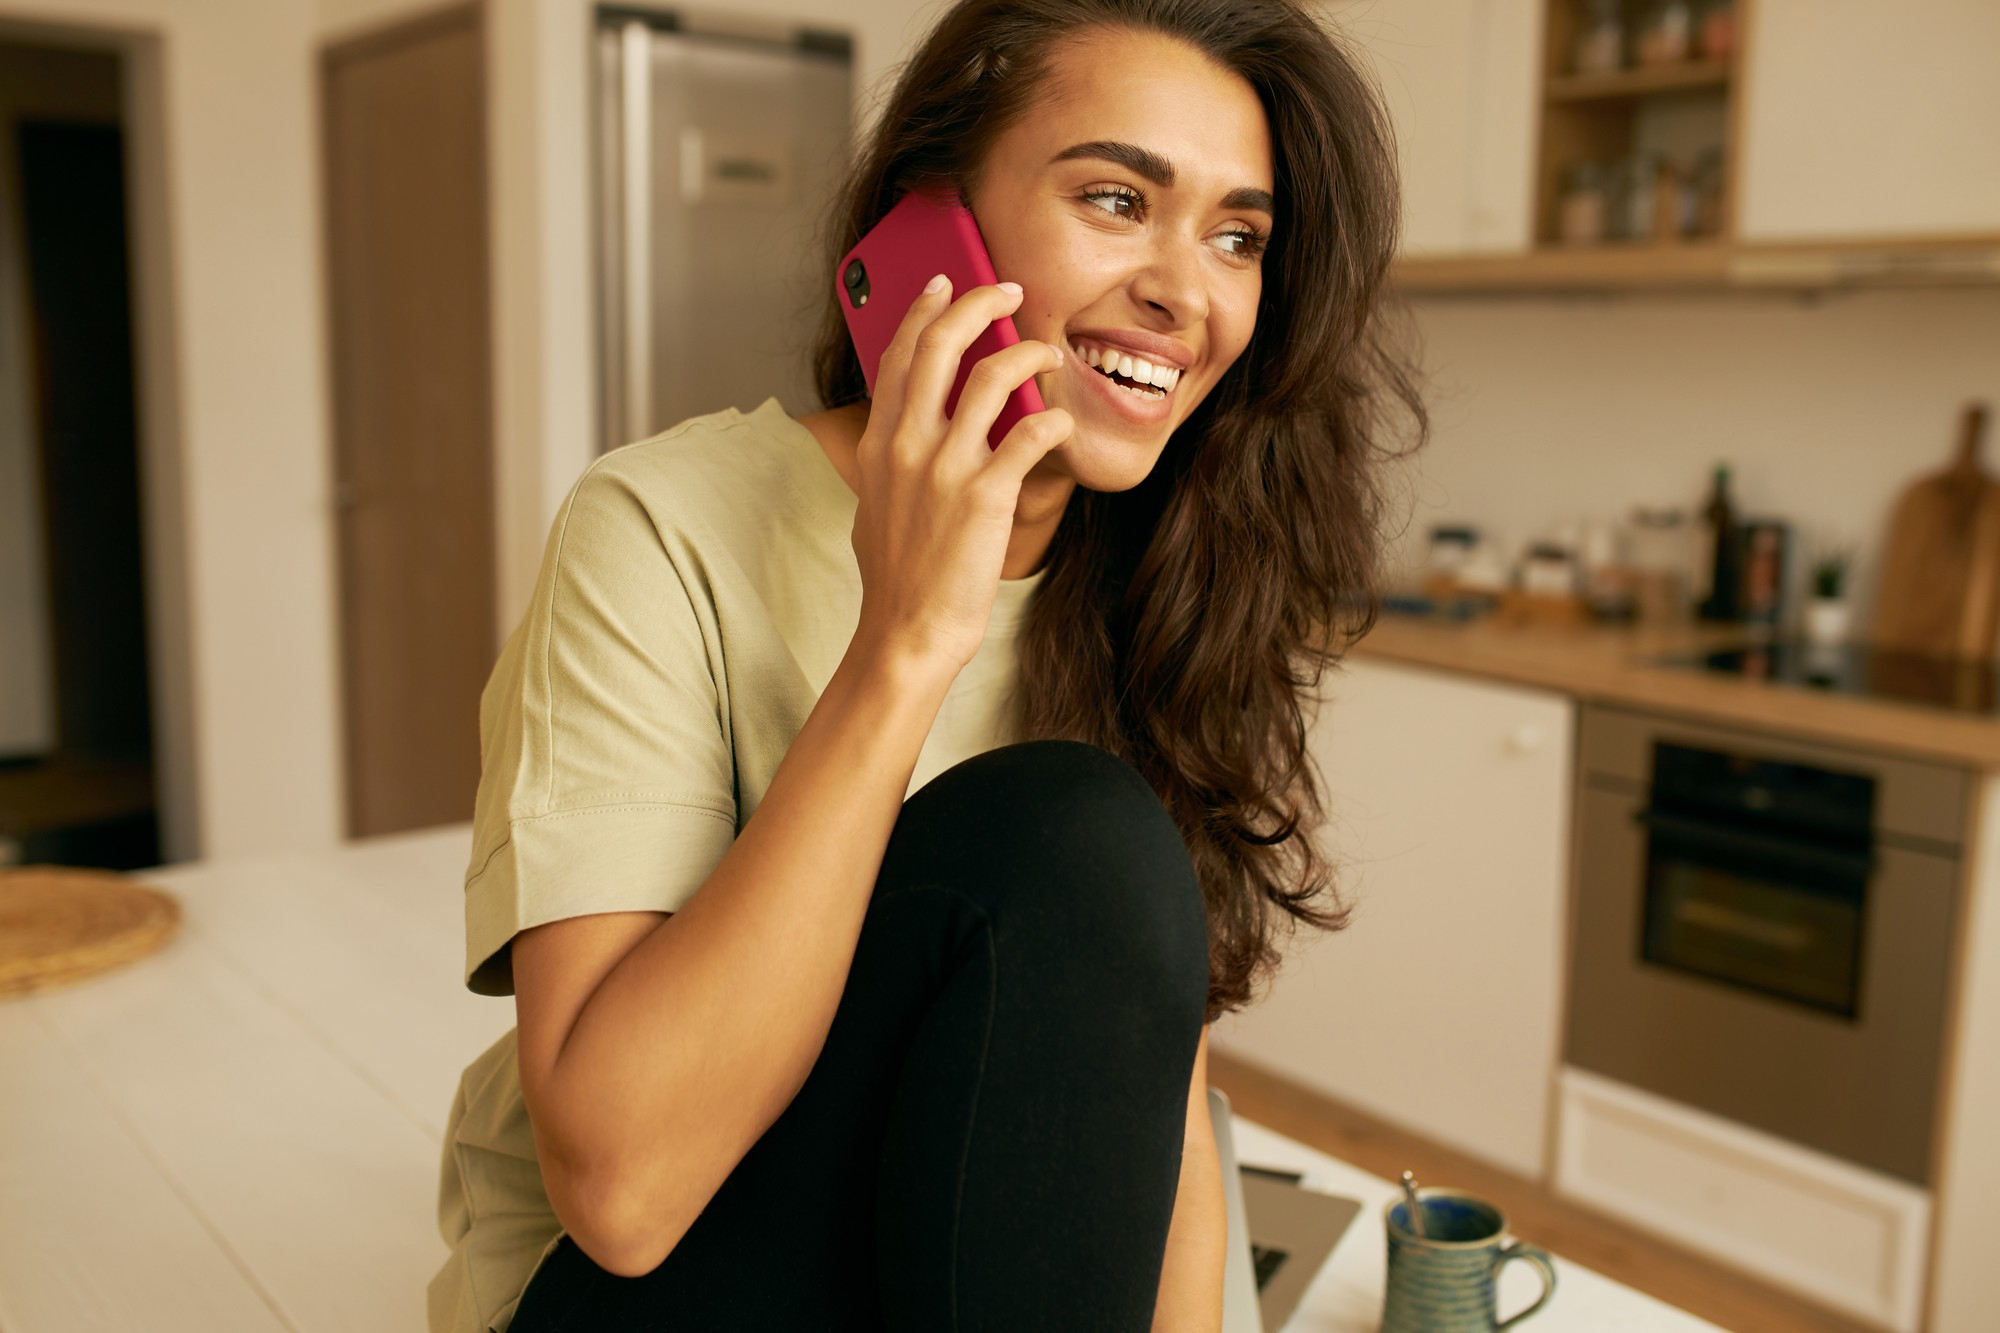 A happy woman speaking on the phone | Source: Freepik